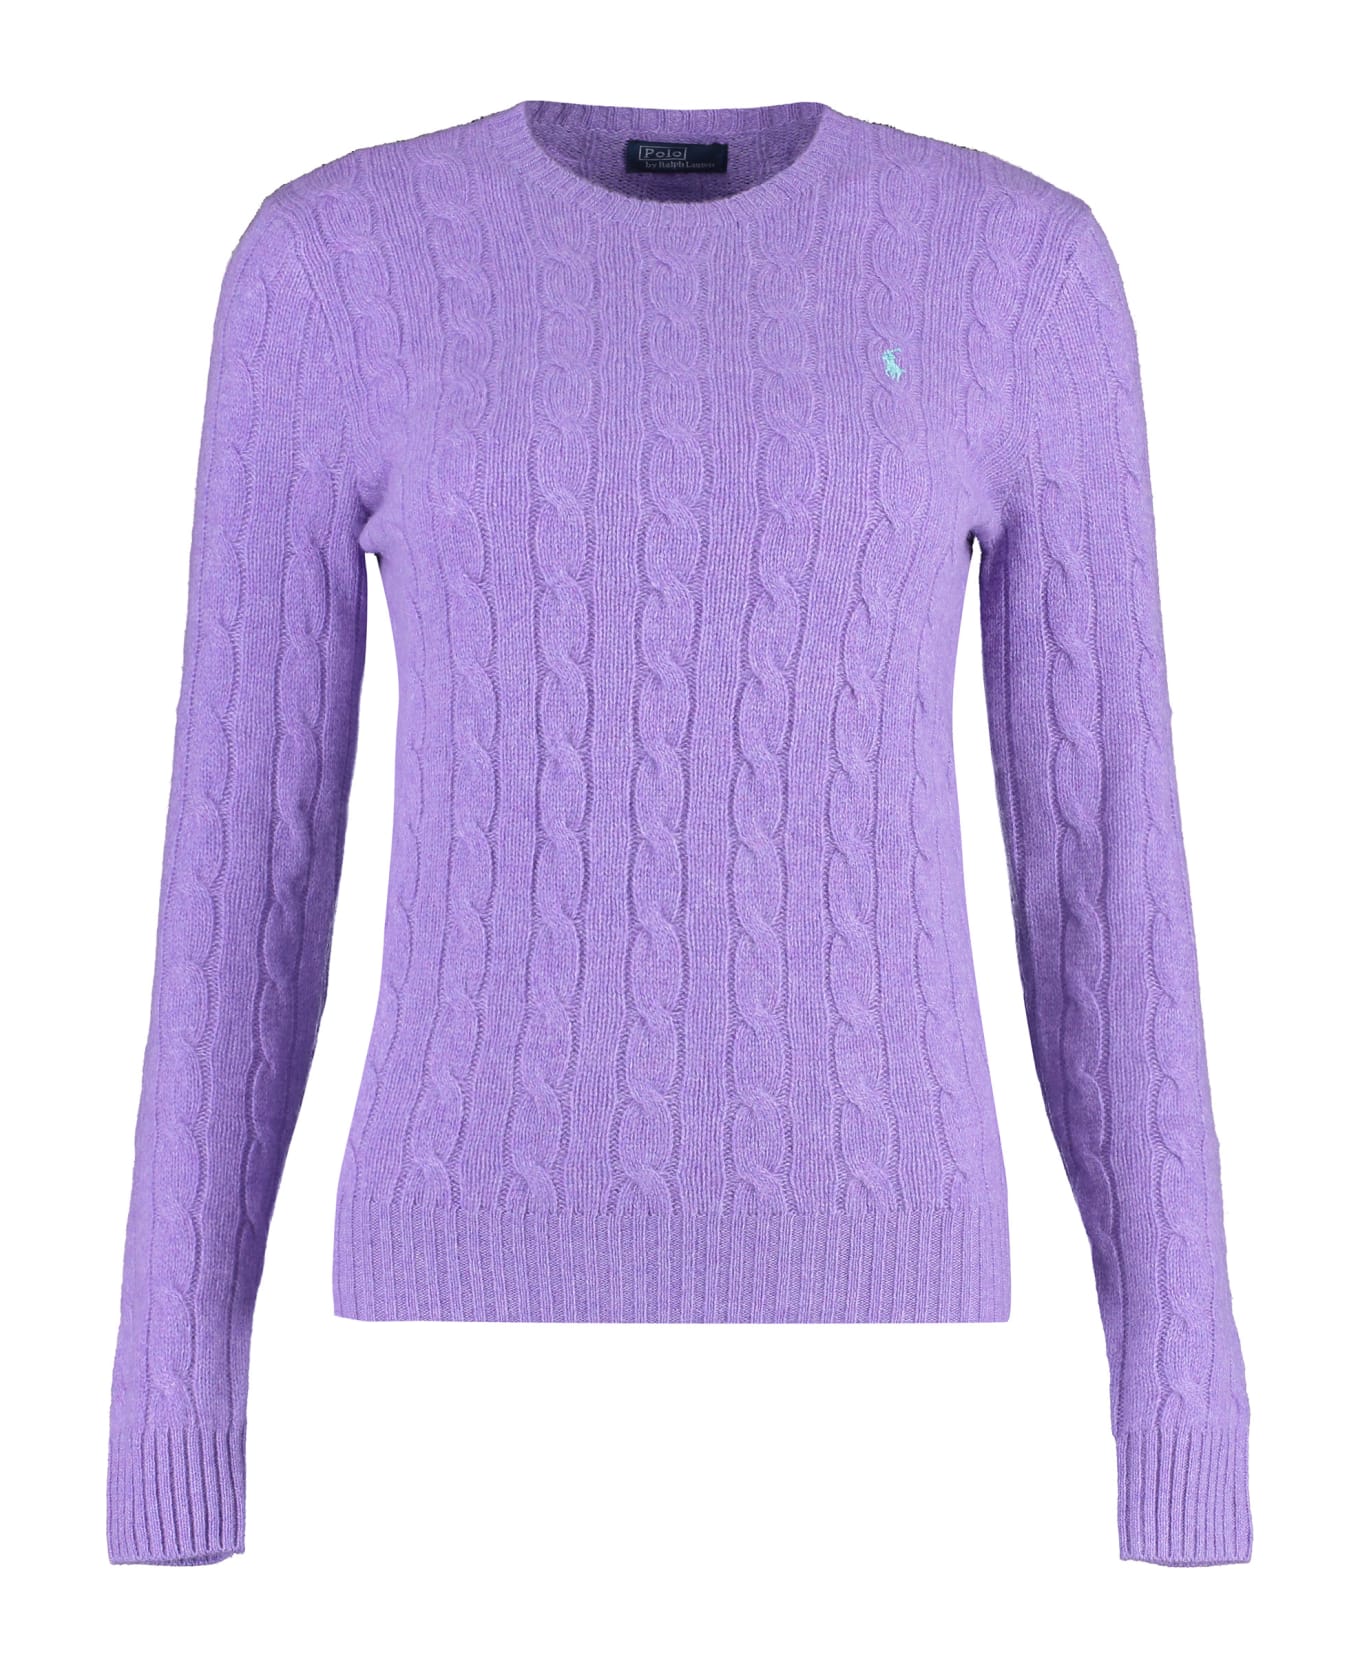 Polo Ralph Lauren Cable Knit Sweater - Purple